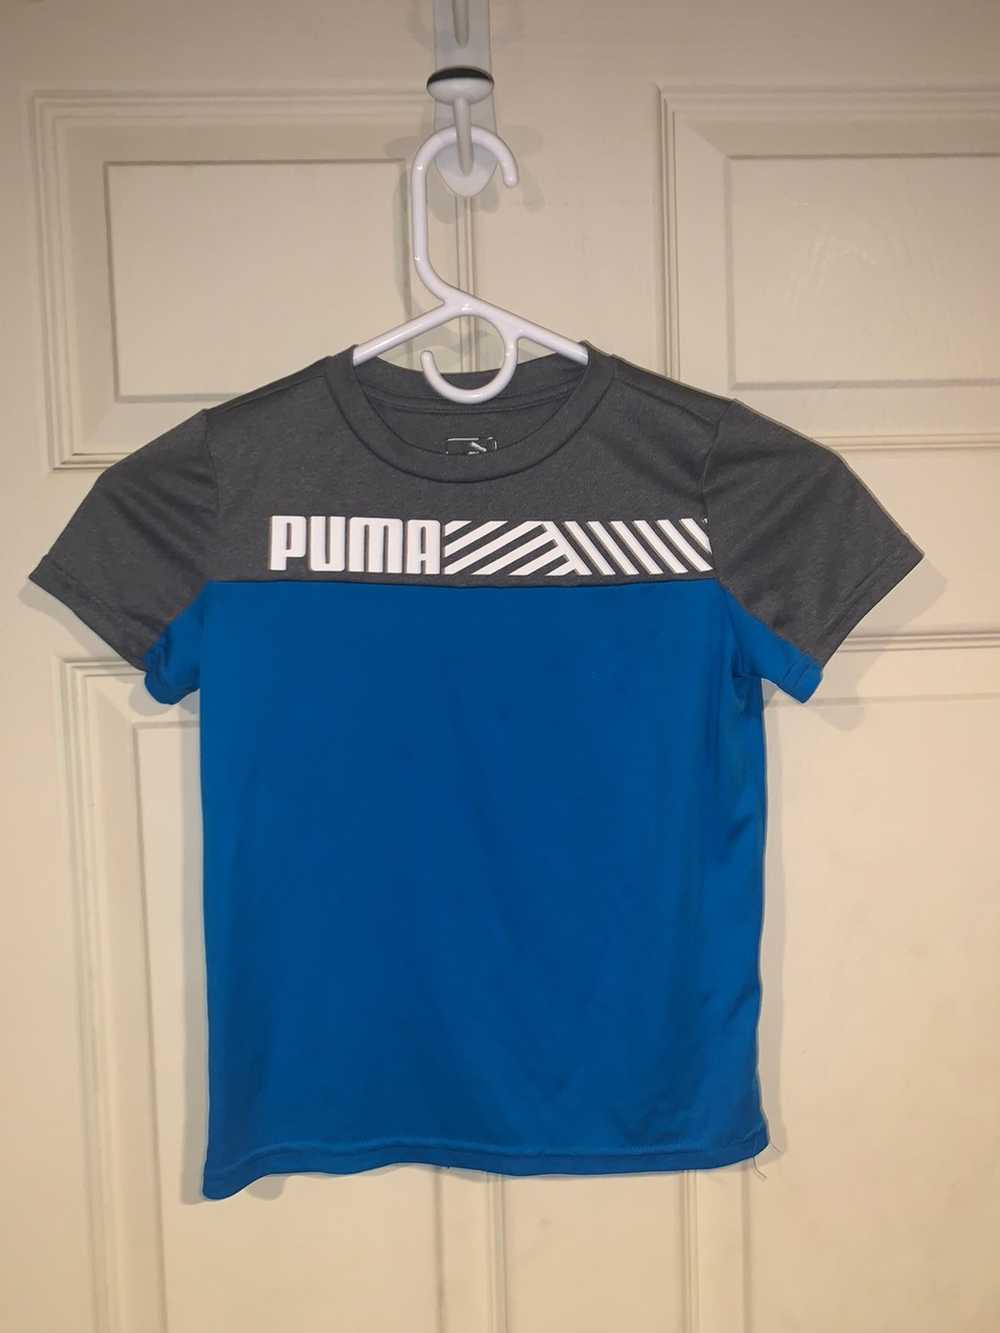 Puma Boys shirt size 6 - image 1